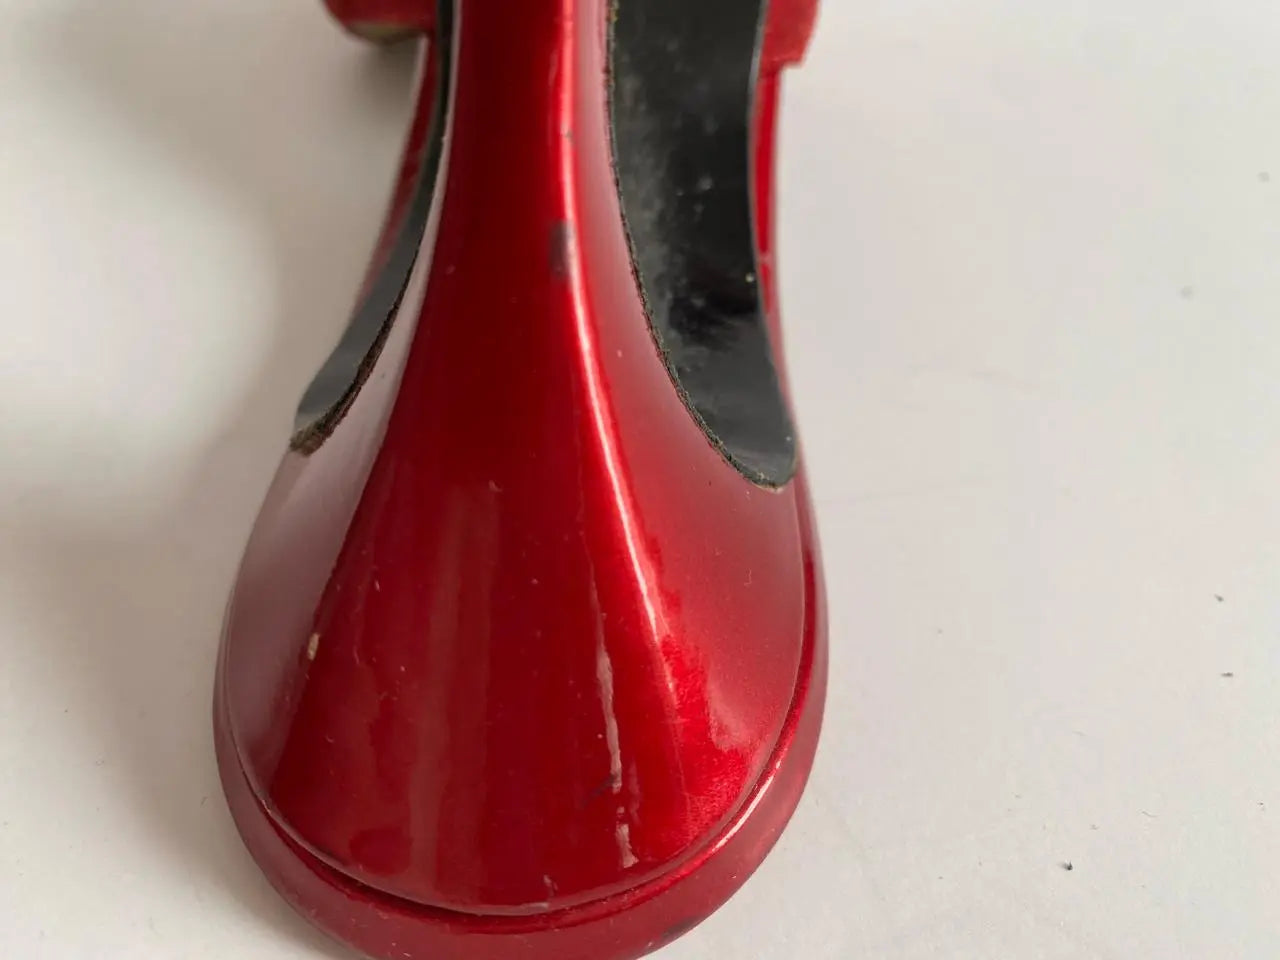 Warren Edwards—stunning vibrant red shoes from New York Vivienne Austin